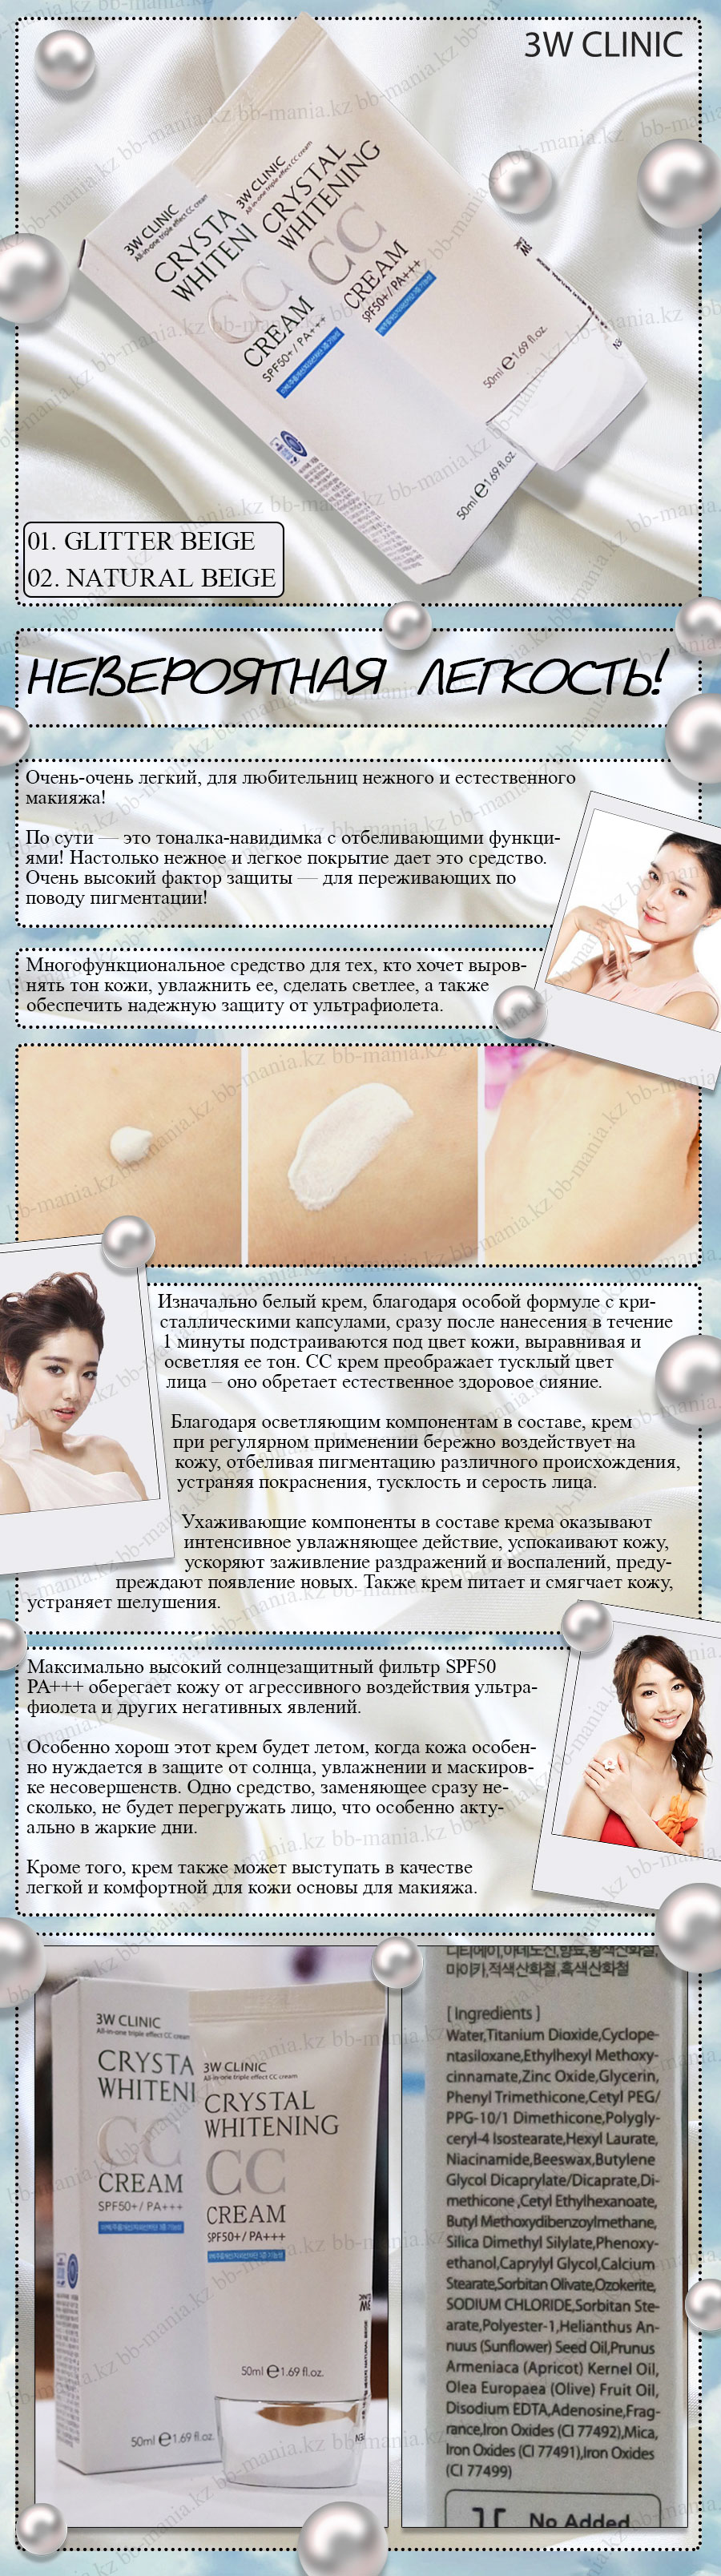 Crystal Whitening CC Cream [3w Clinic] картинка